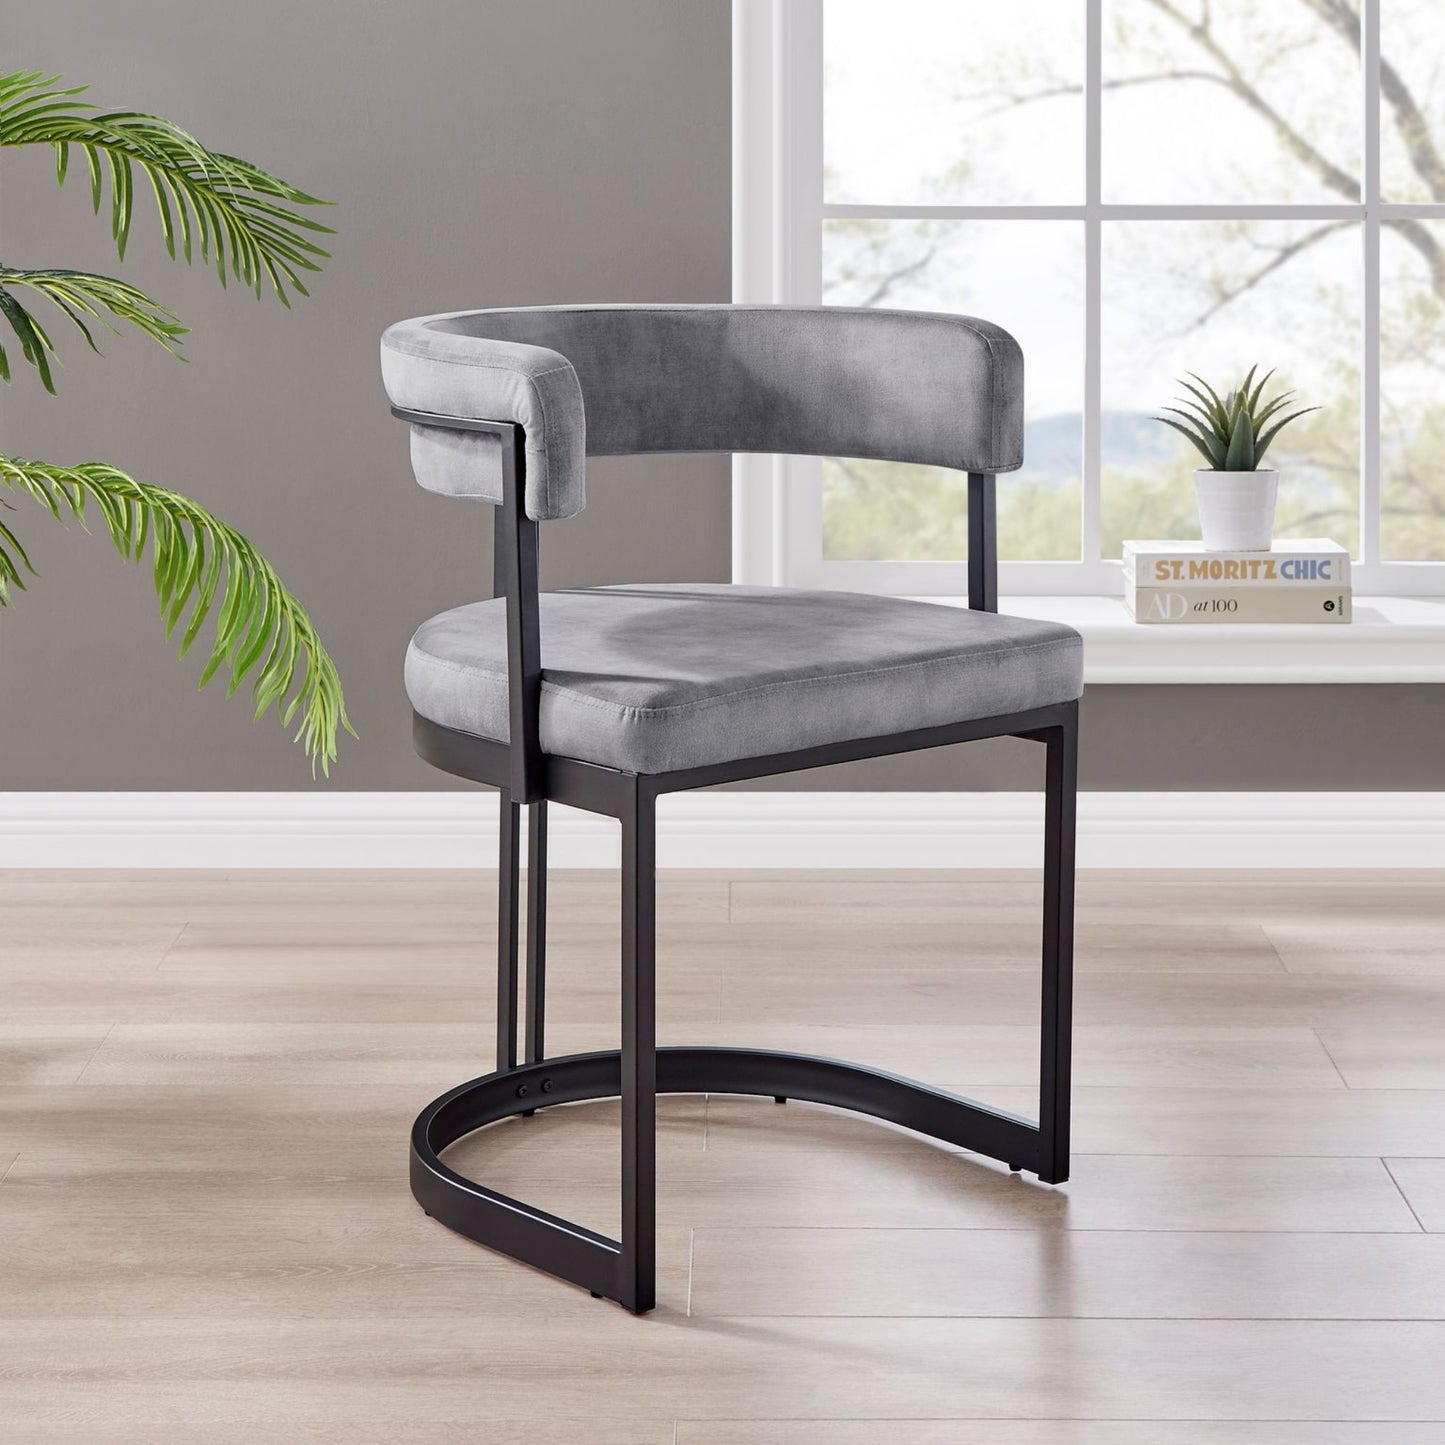 Curved Grey Velvet and Black Frame Dining Chair